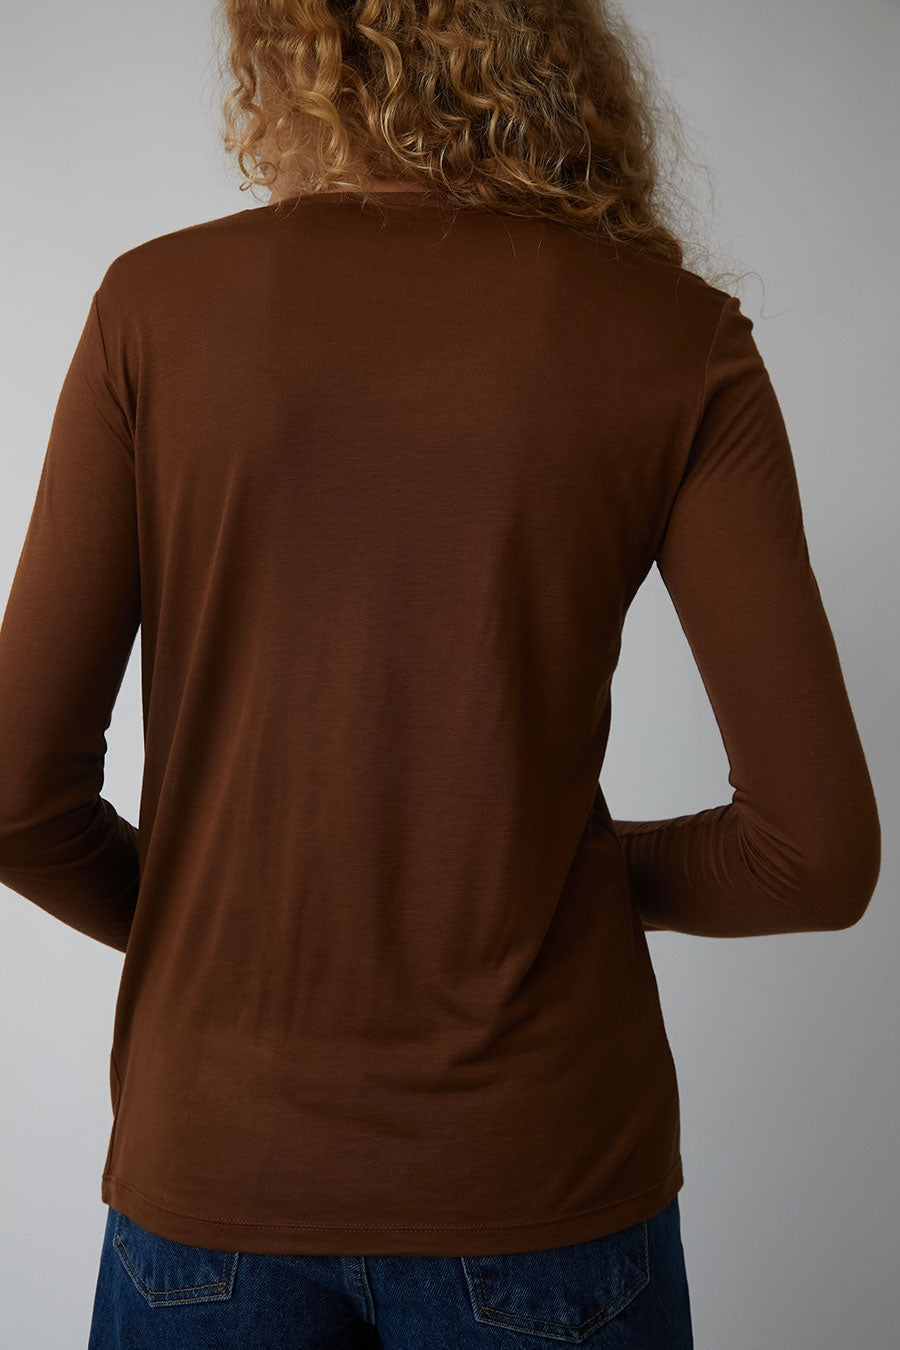 Long Sleeve T-Shirts for Women